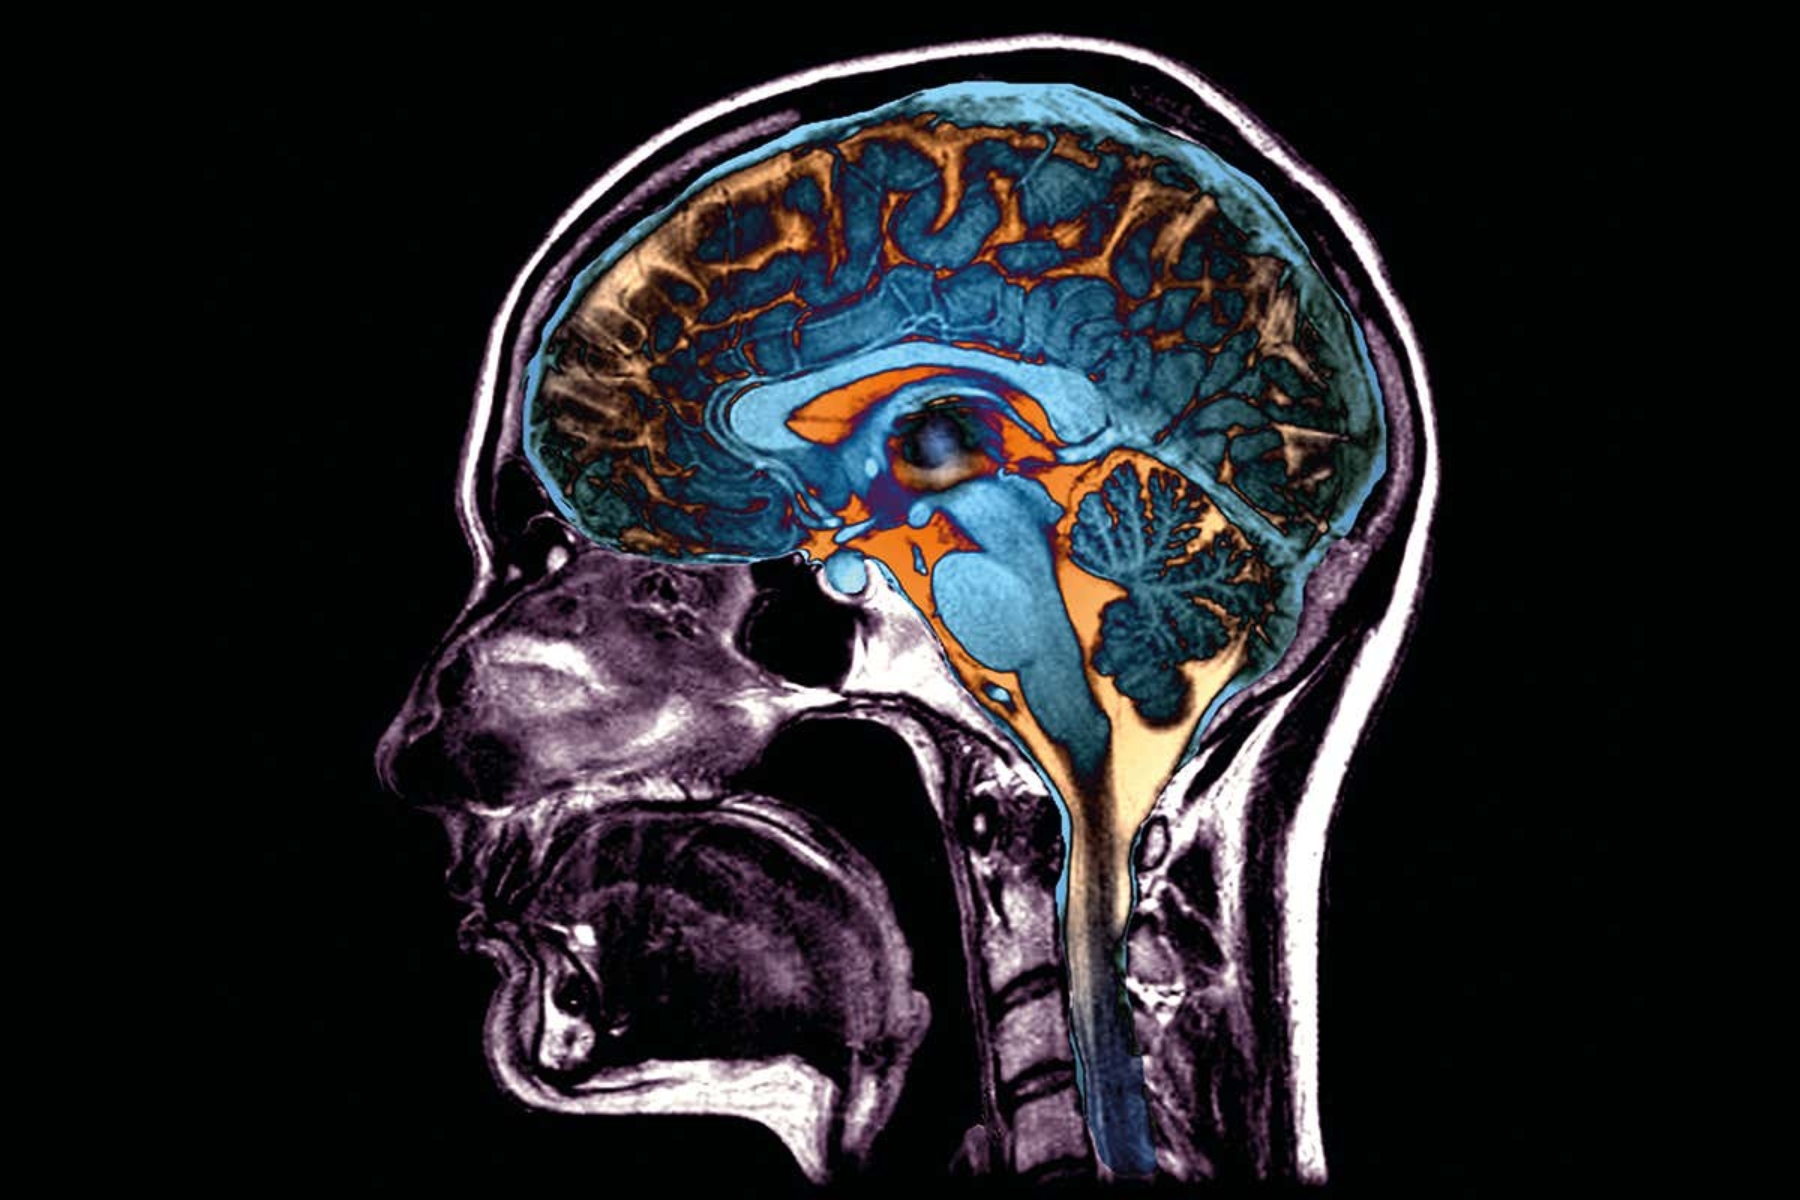 Covid-19 λειτουργίες: Προσβάλλει εγκέφαλο και μπορεί να προκαλέσει μόνιμη βλάβη